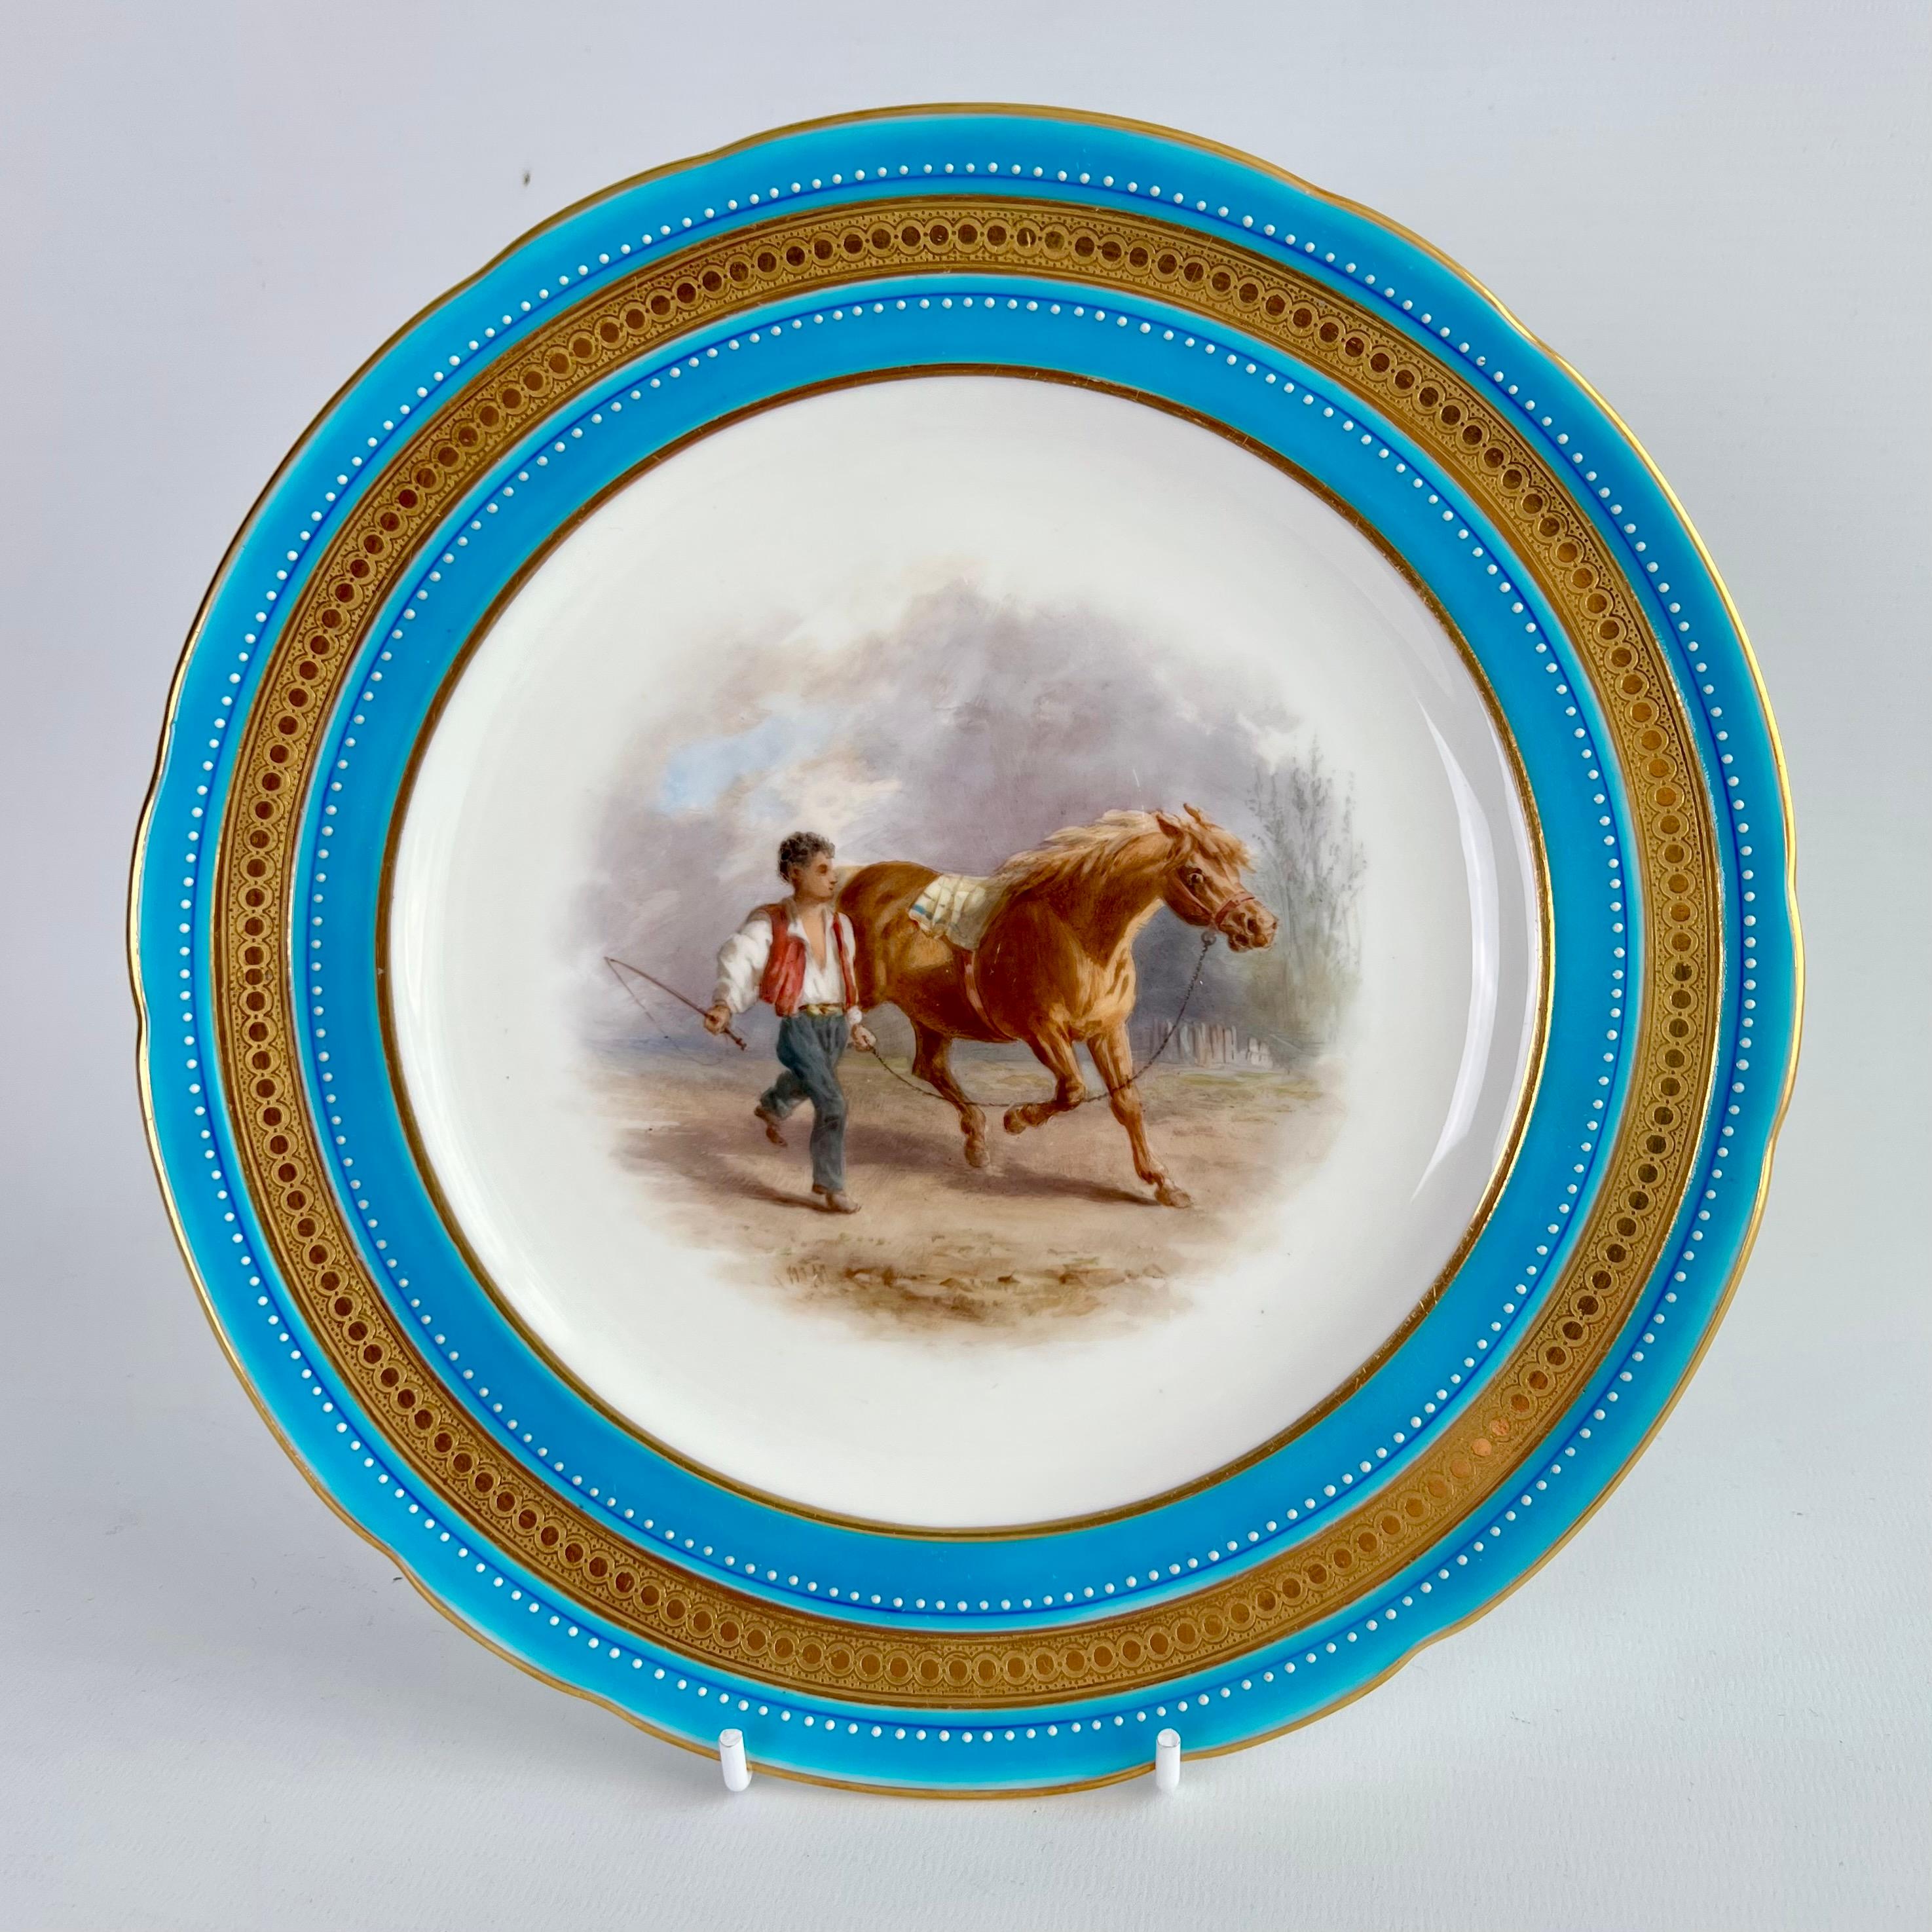 Minton Porcelain Dessert Service, Turquoise, Equestrian Horses, Victorian, 1871 For Sale 2